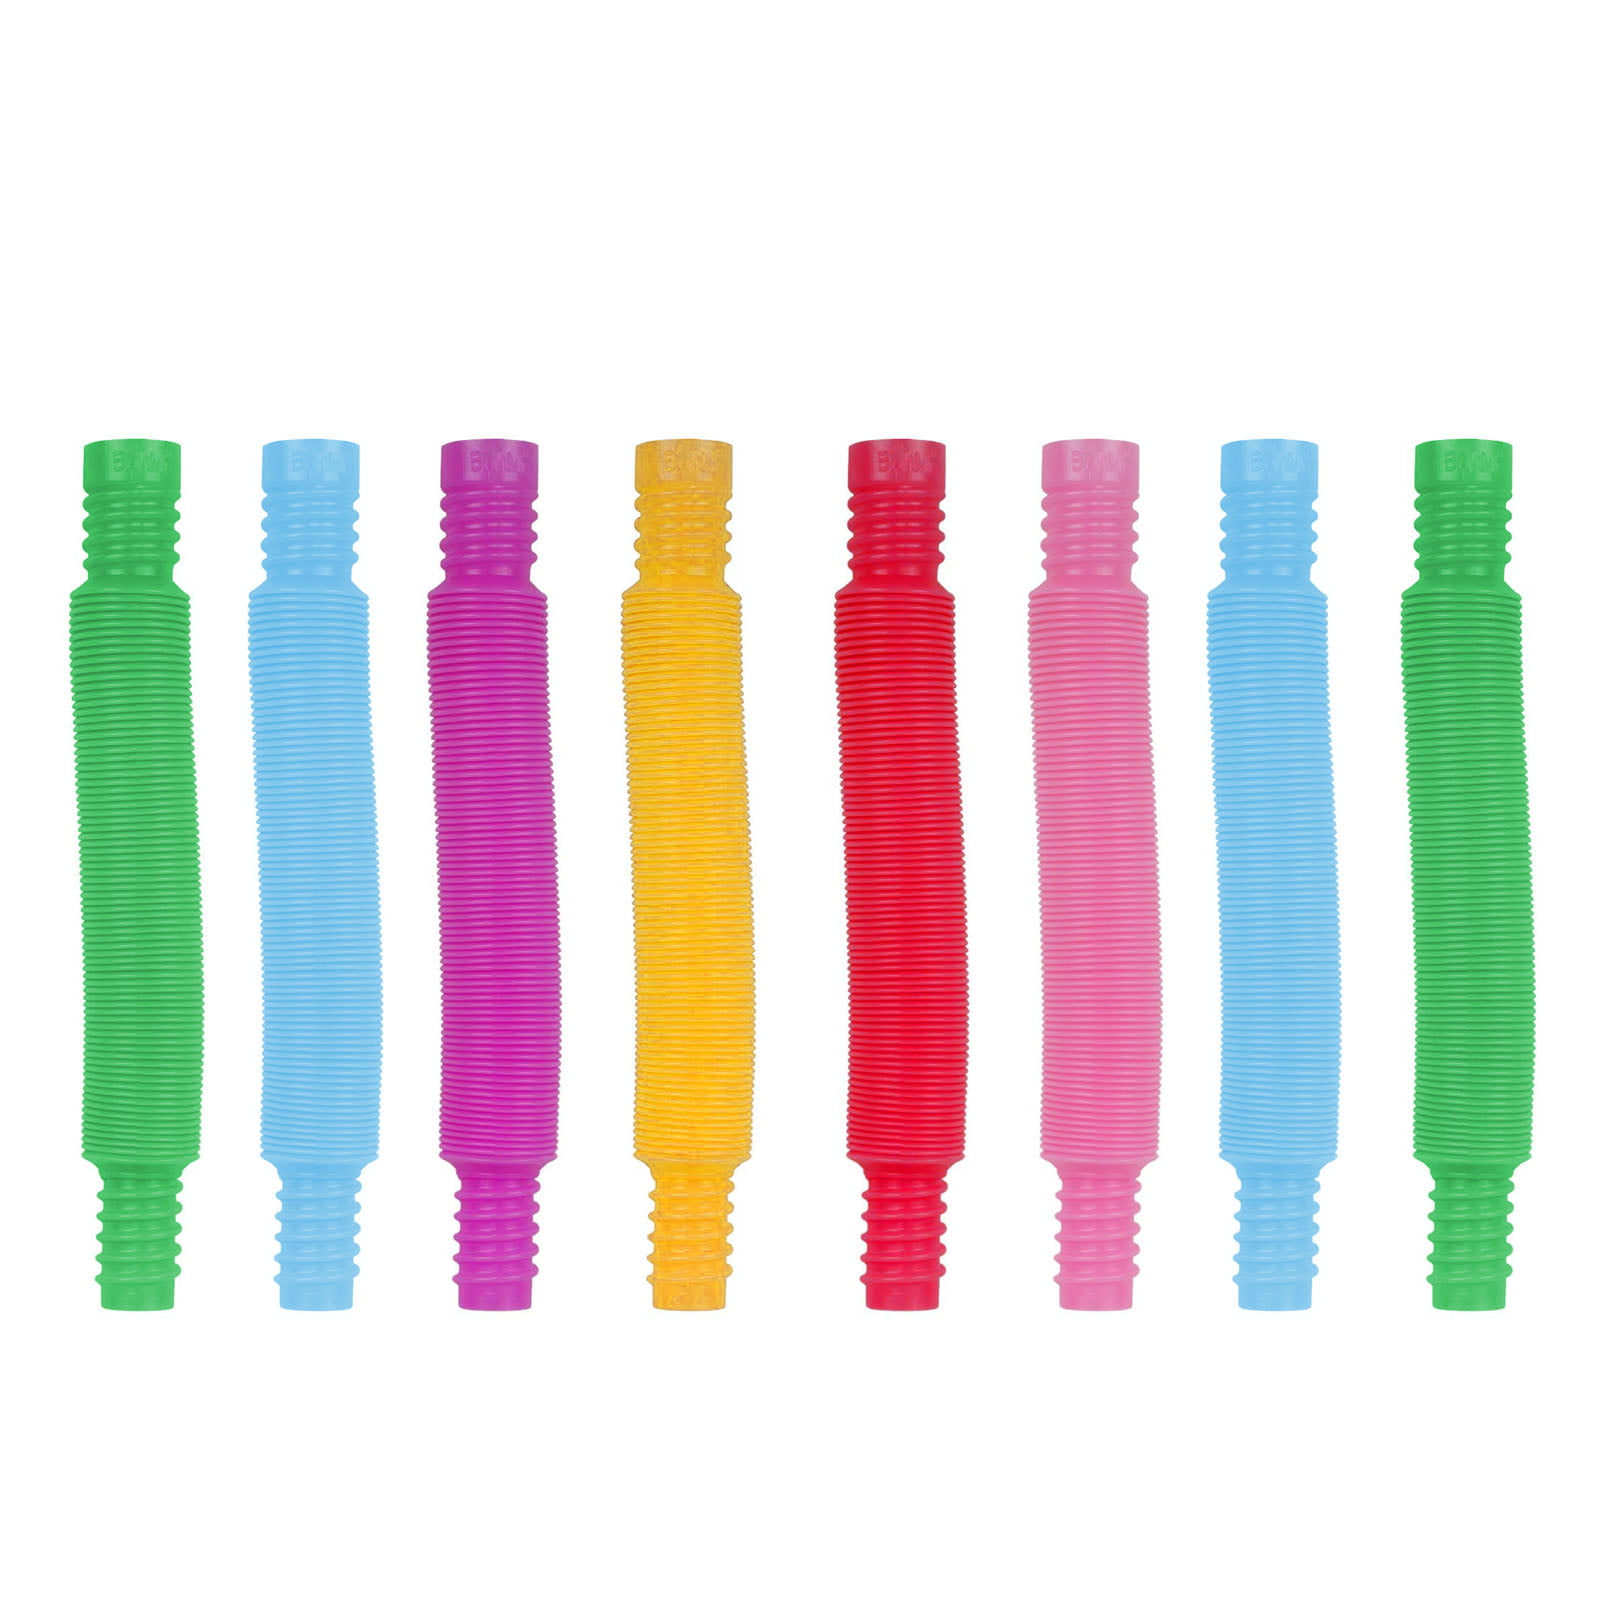 8PC Plastic Fidget Toy Pop Tubes Stress Relief Hand Toys Focus Interesty Sensory 